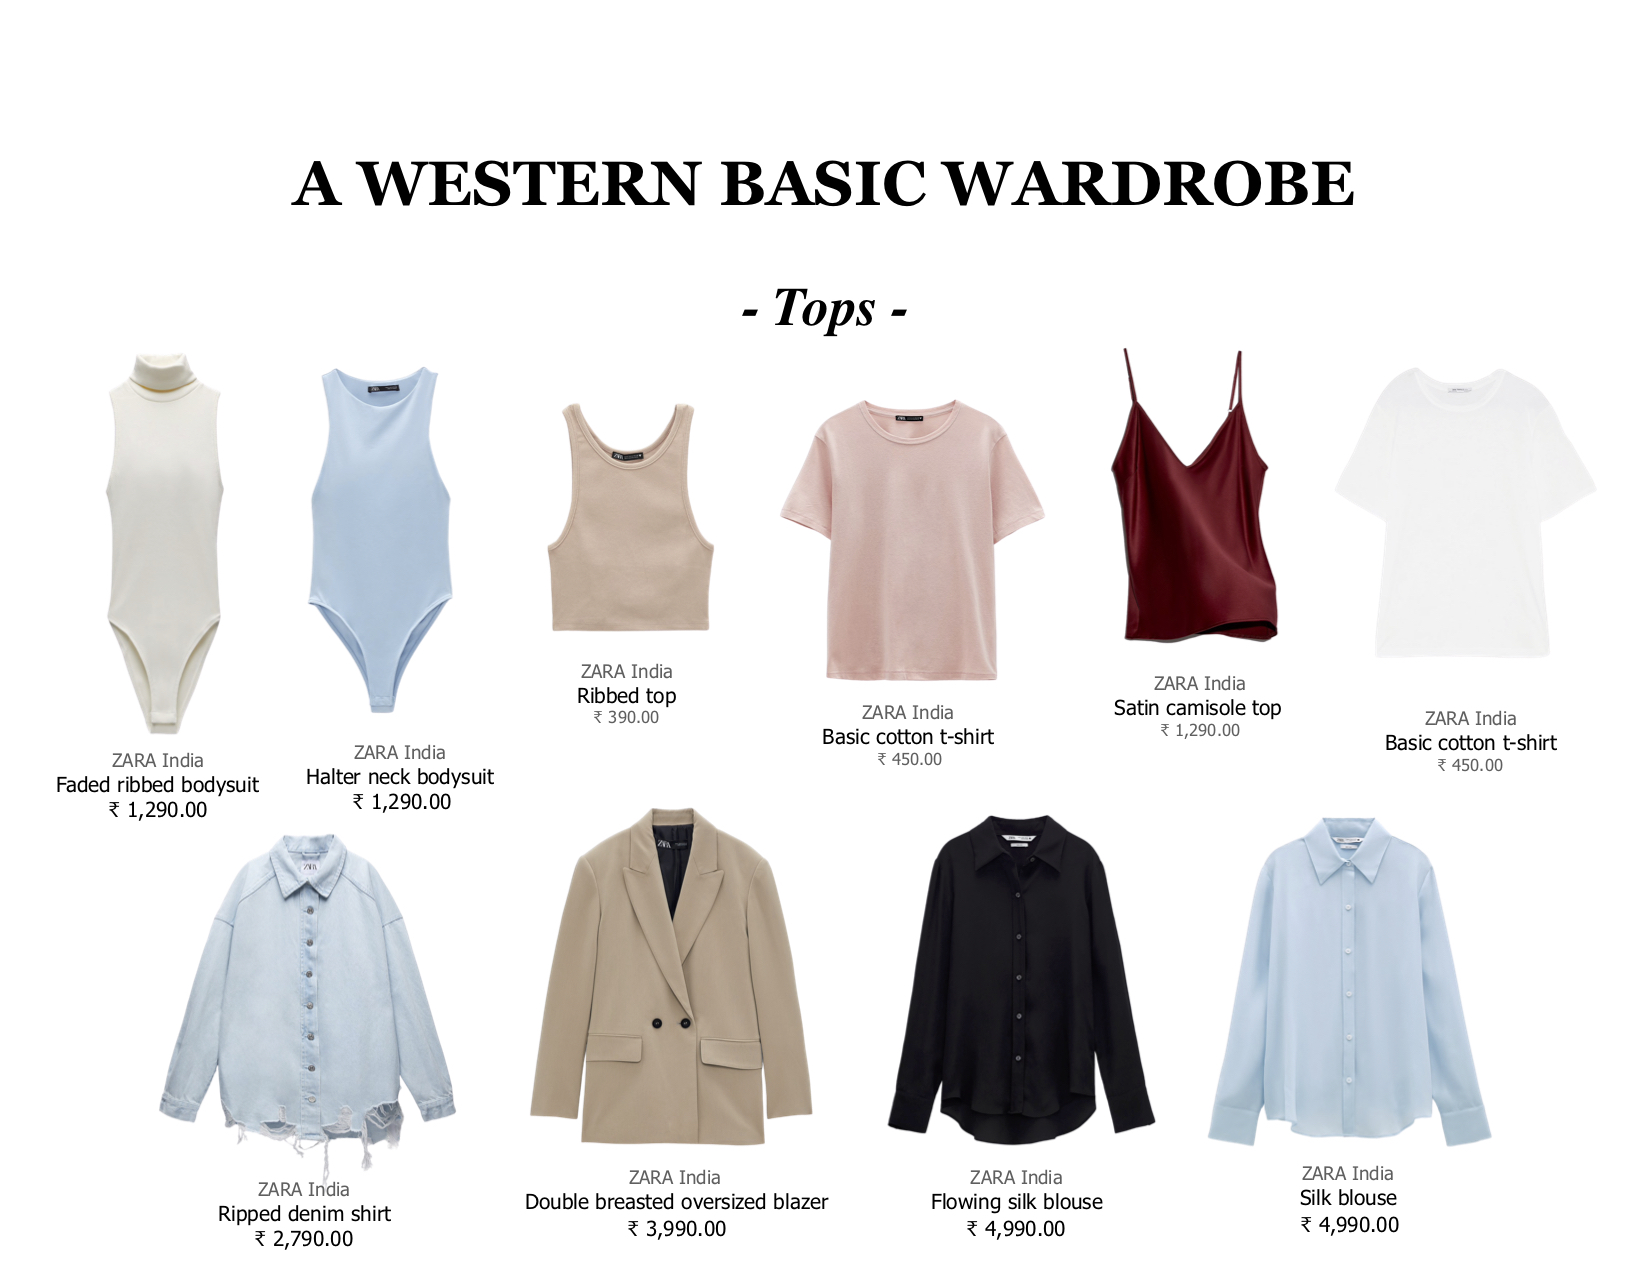 Western basic wardrobe, wardrobe essentials, classic style basics, modern basics, what tower, style ideas, beautiful look, classic look